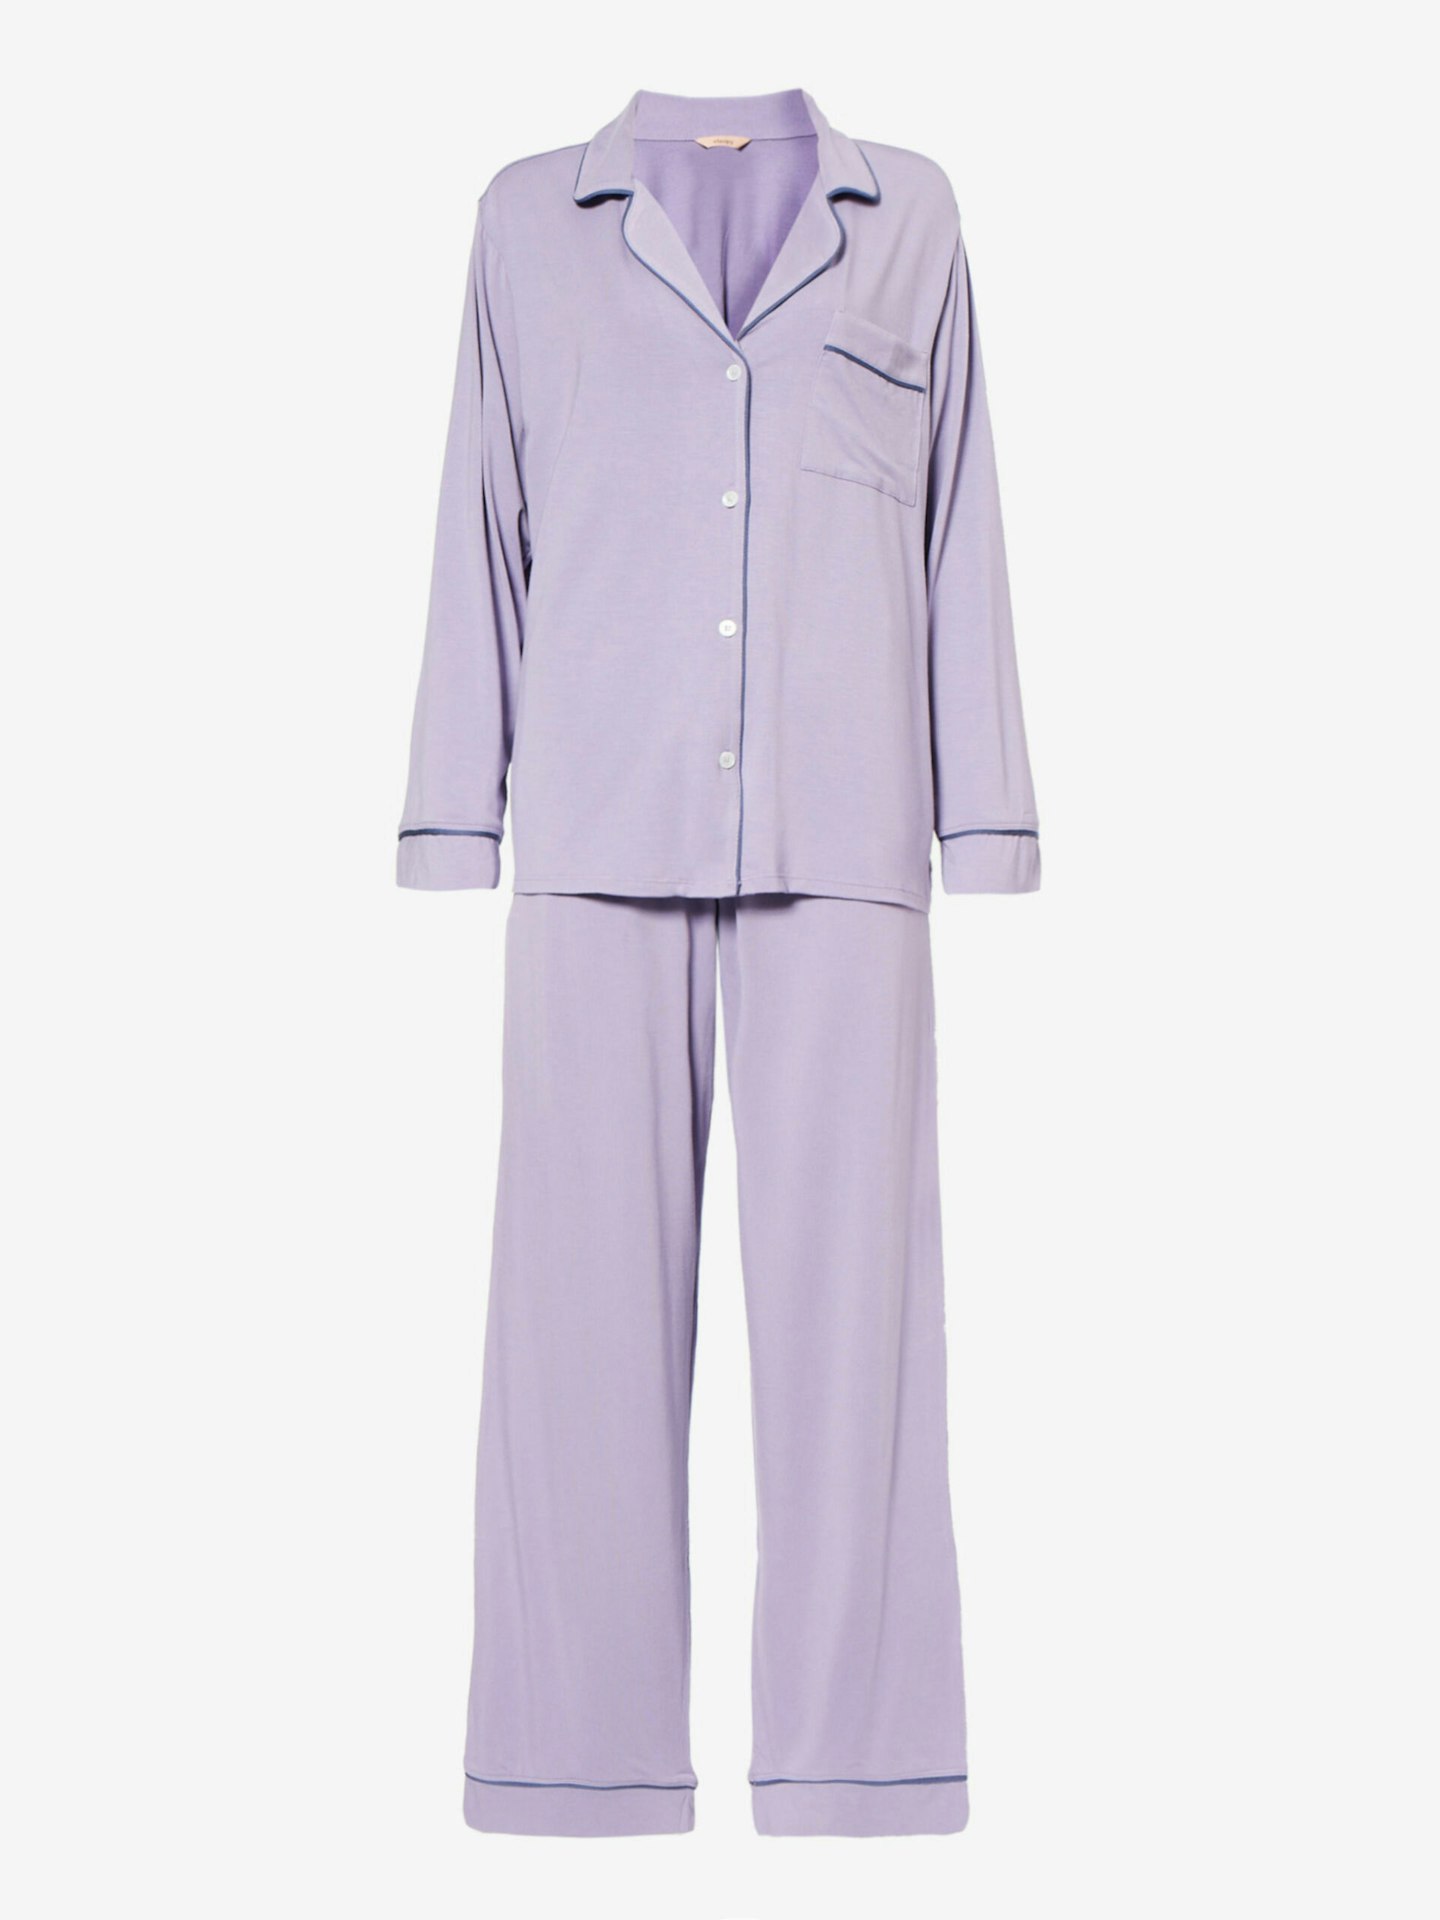 Eberjey, Gisele Piped-Trim Jersey Pyjamas